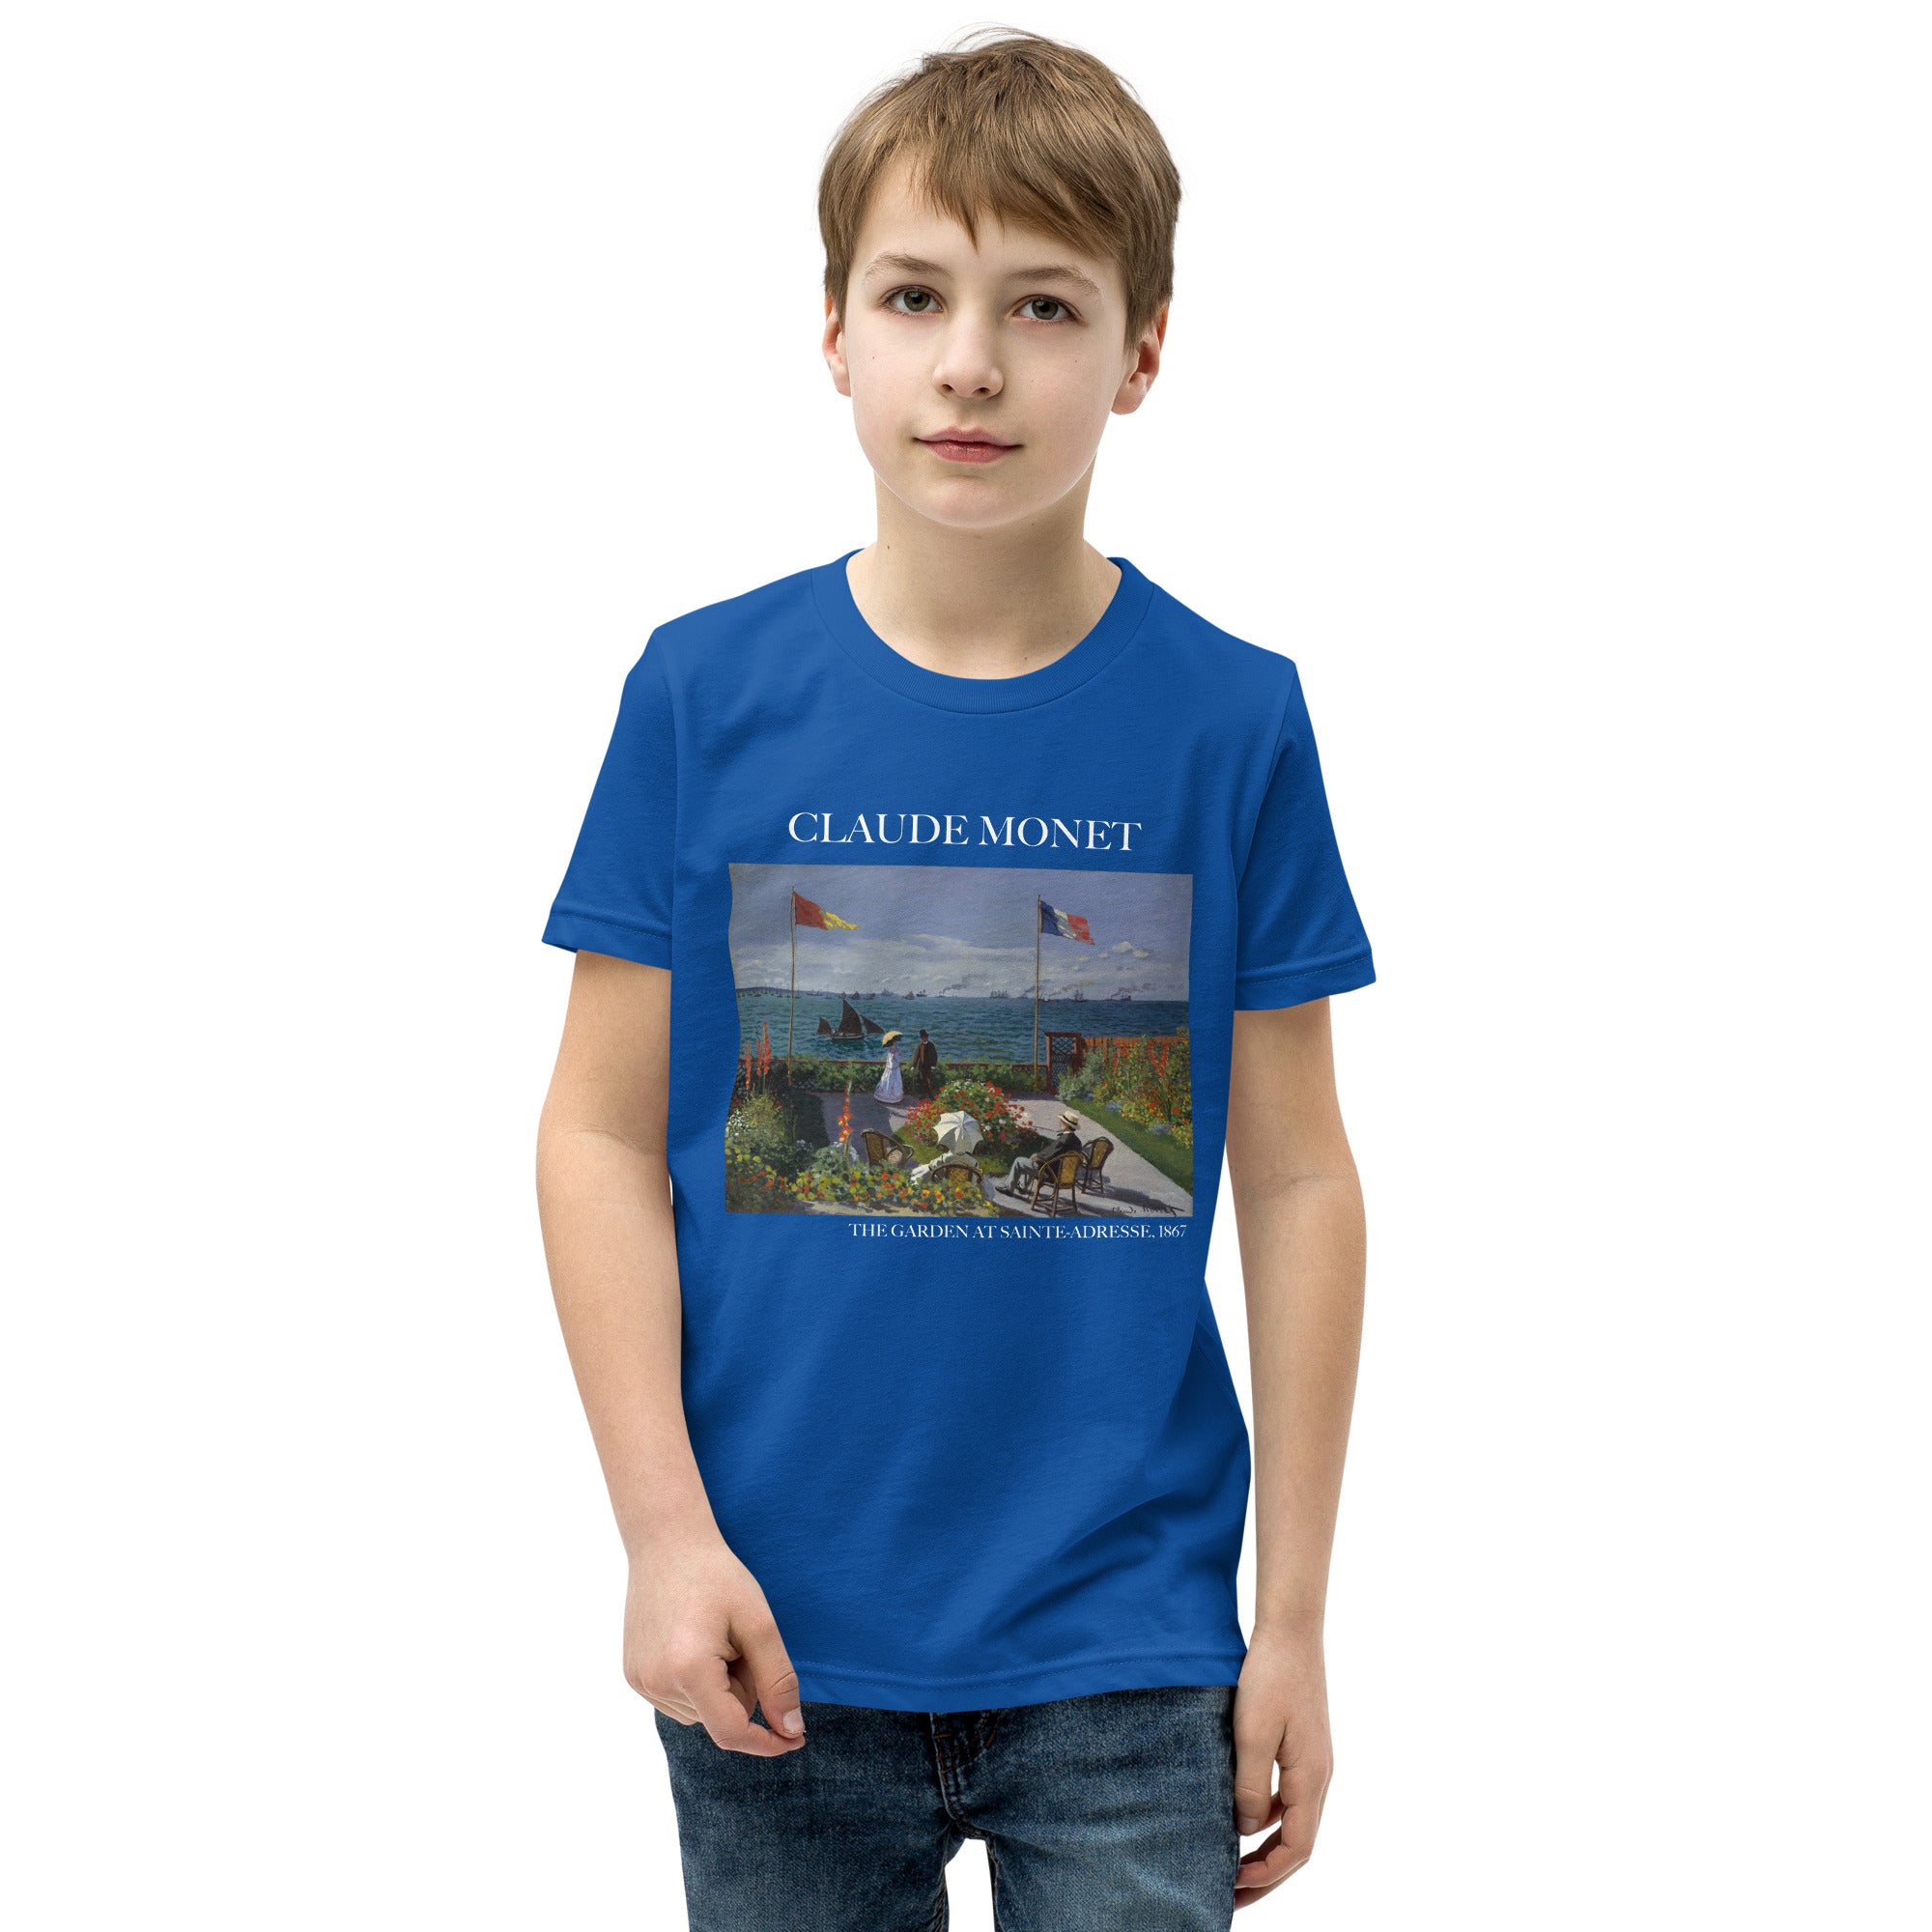 Claude Monet 'The Garden at Sainte-Adresse' Famous Painting Short Sleeve T-Shirt | Premium Youth Art Tee